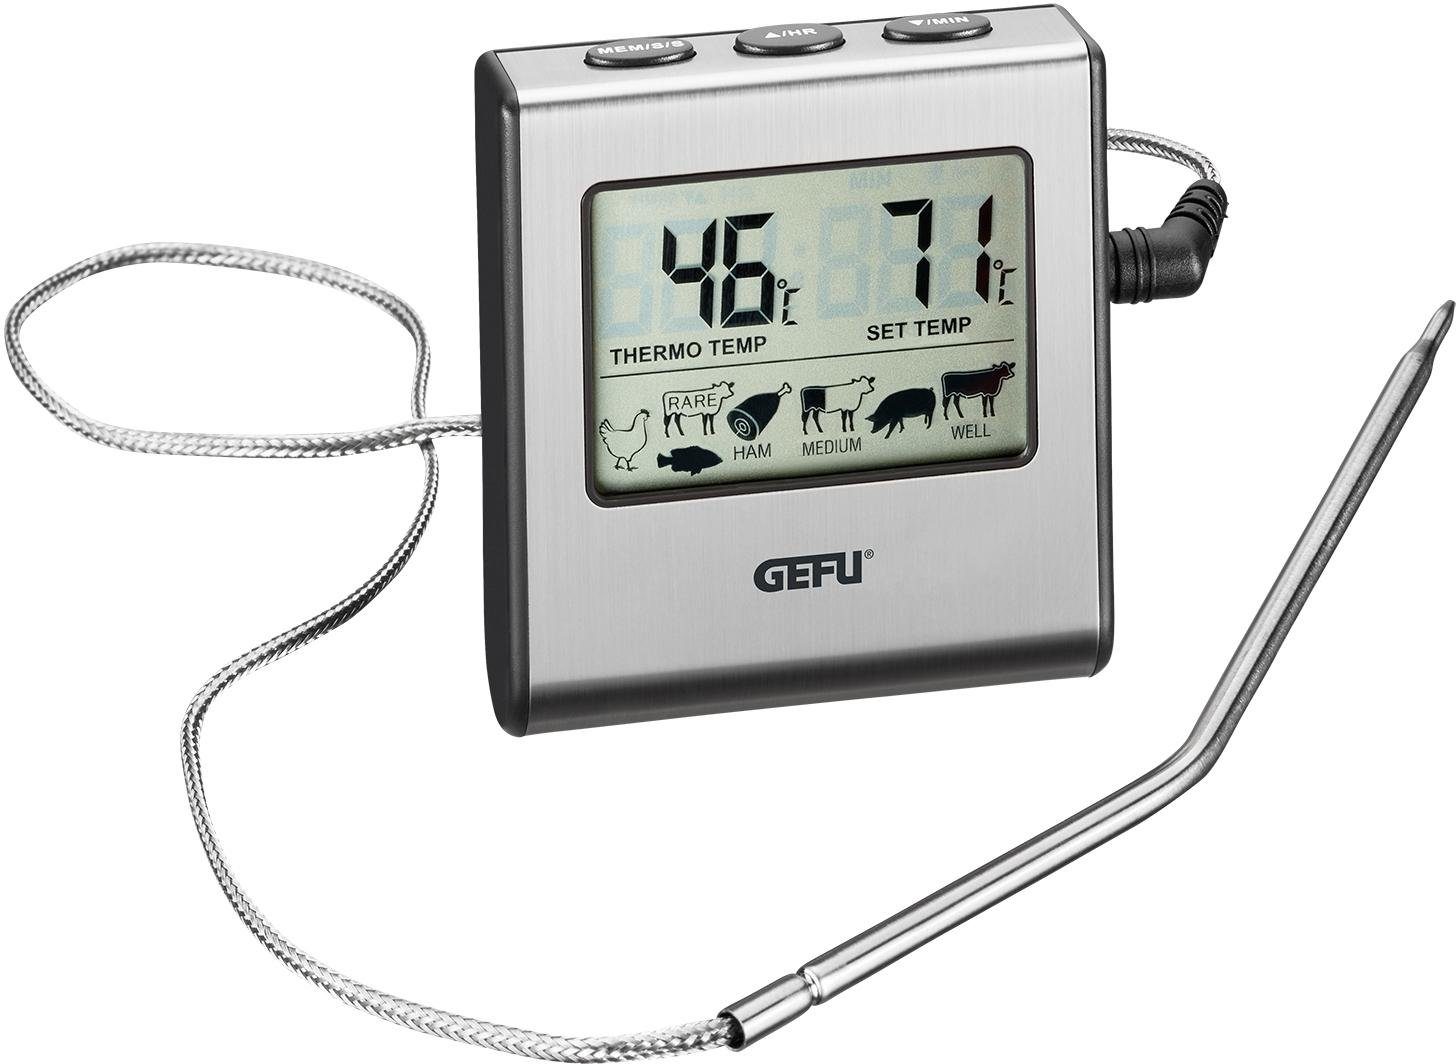 GEFU Bratenthermometer TEMPERE, digital